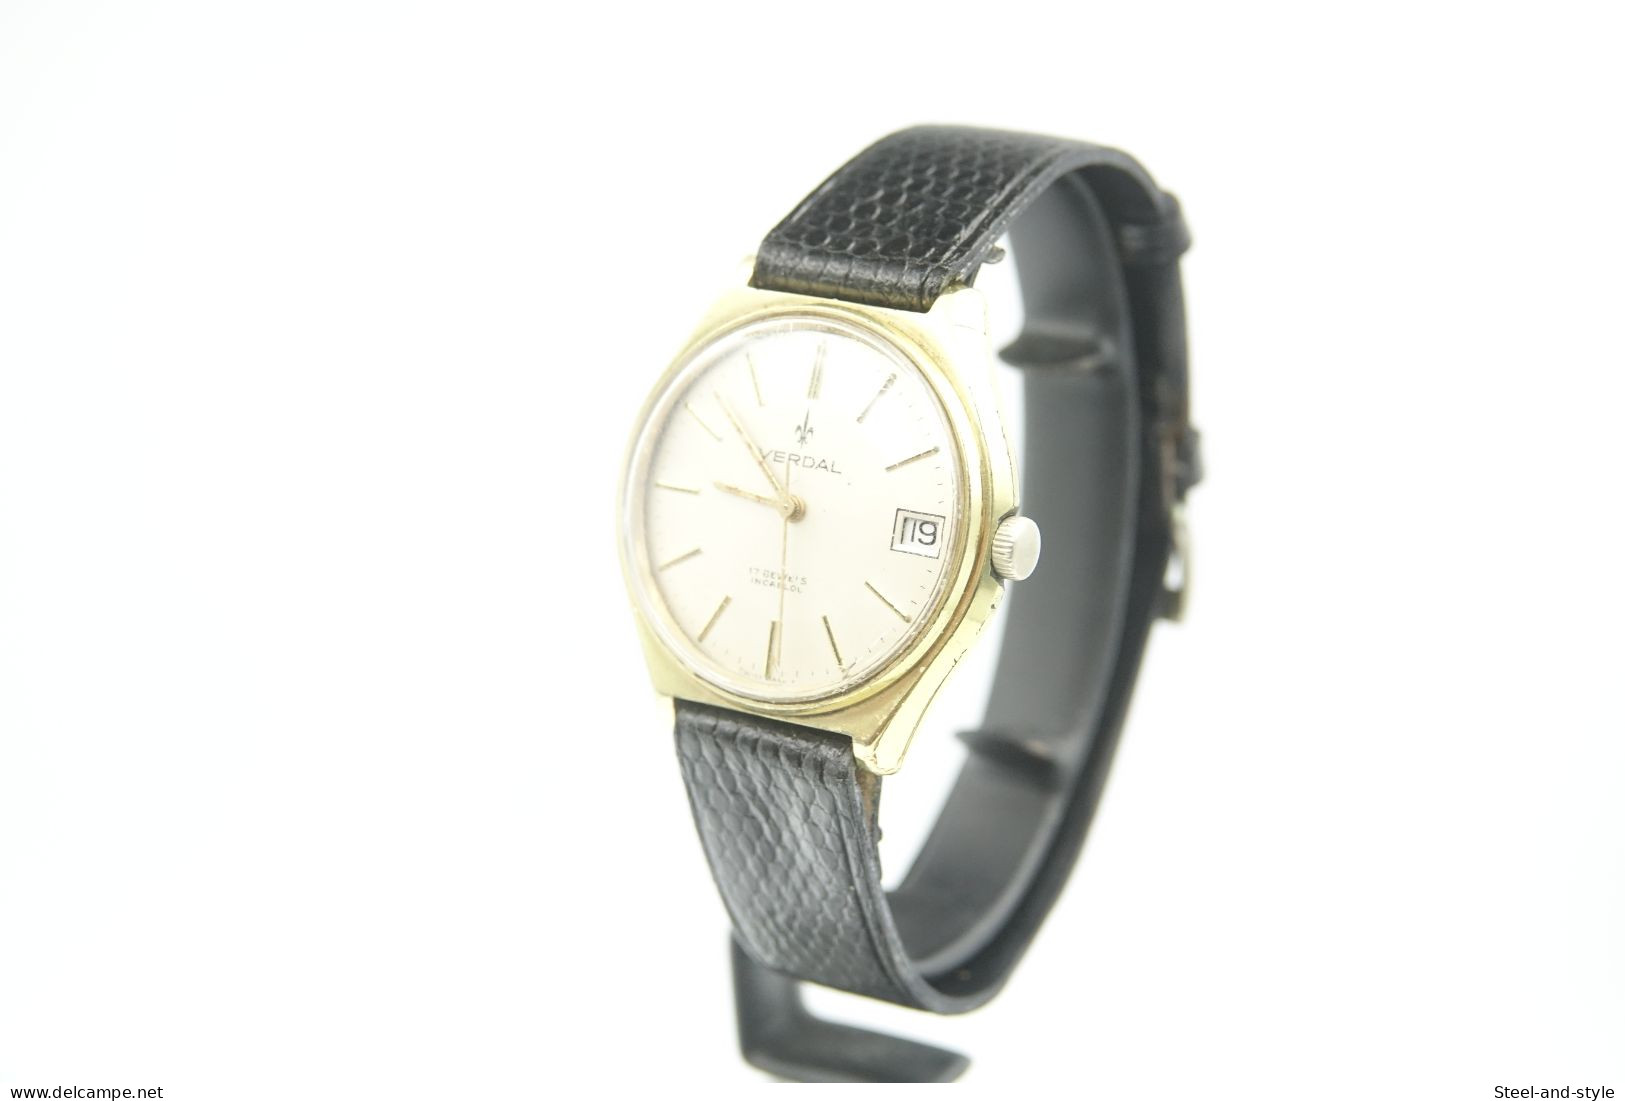 Watches : VERDAL 17 JEWELS INCABLOC HANDWIND - Original - Running - 1960s - Orologi Di Lusso